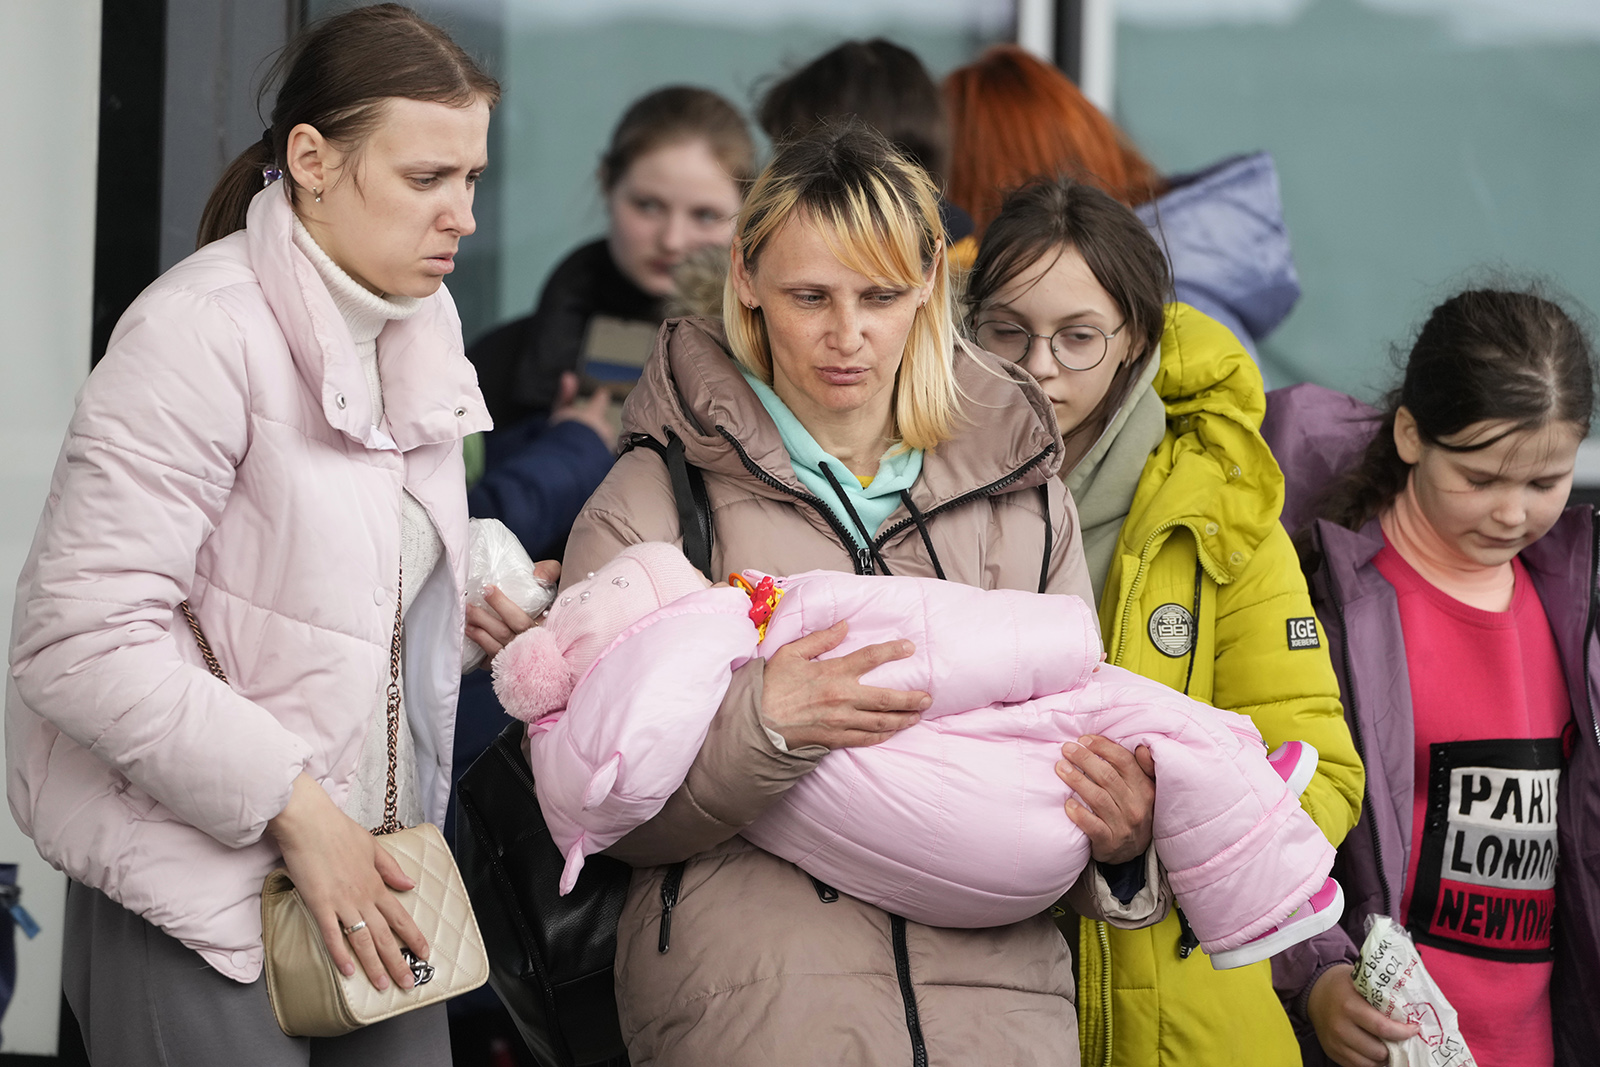 Refugee women with children walk to board transport at the central train station in Warsaw, Poland, Thursday, April 7, 2022. (AP Photo/Czarek Sokolowski)